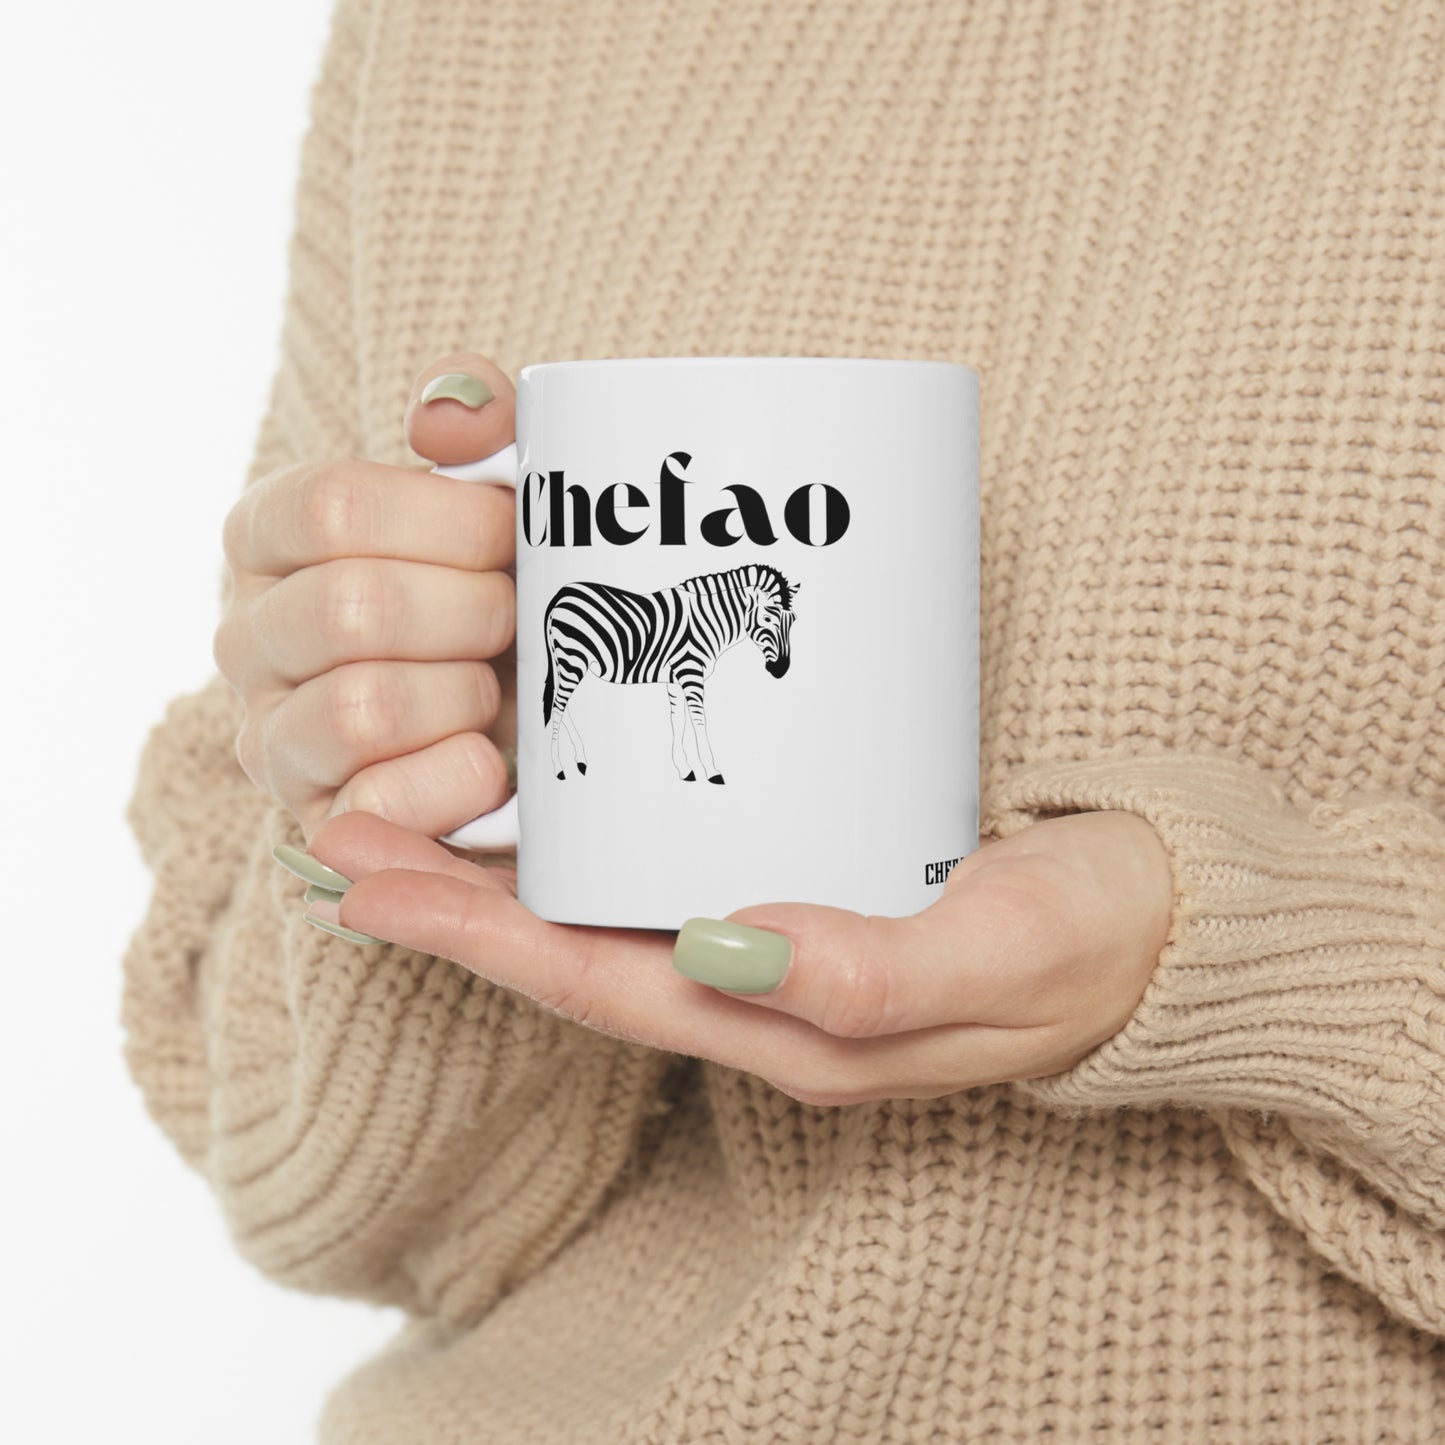 Chefao Zebra II, White Coffee Mug, 11oz